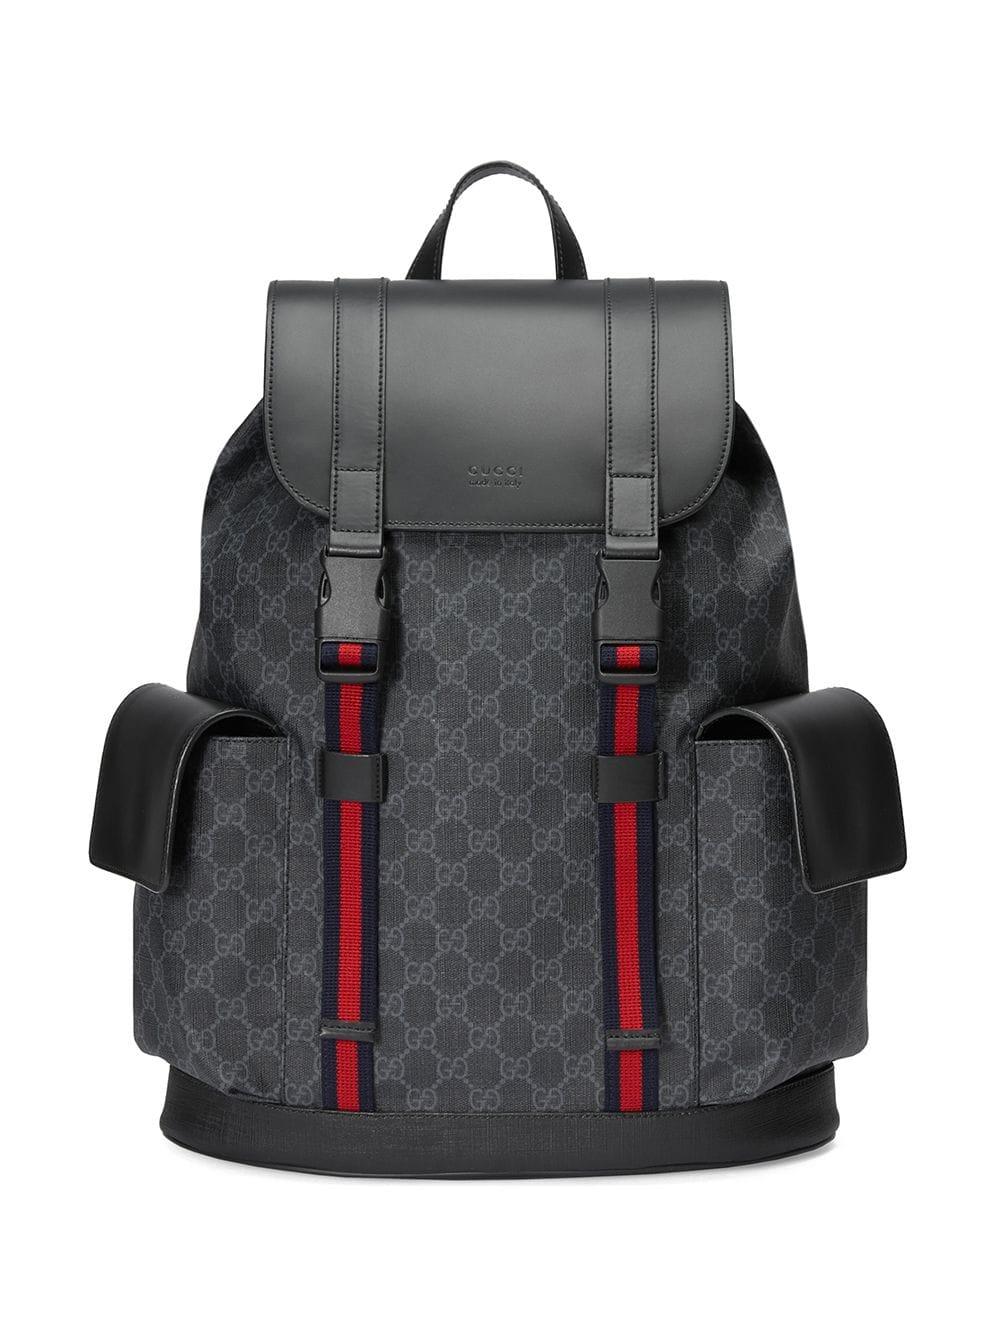 Gucci Soft GG Supreme Backpack in Black for Men - Save 2% - Lyst